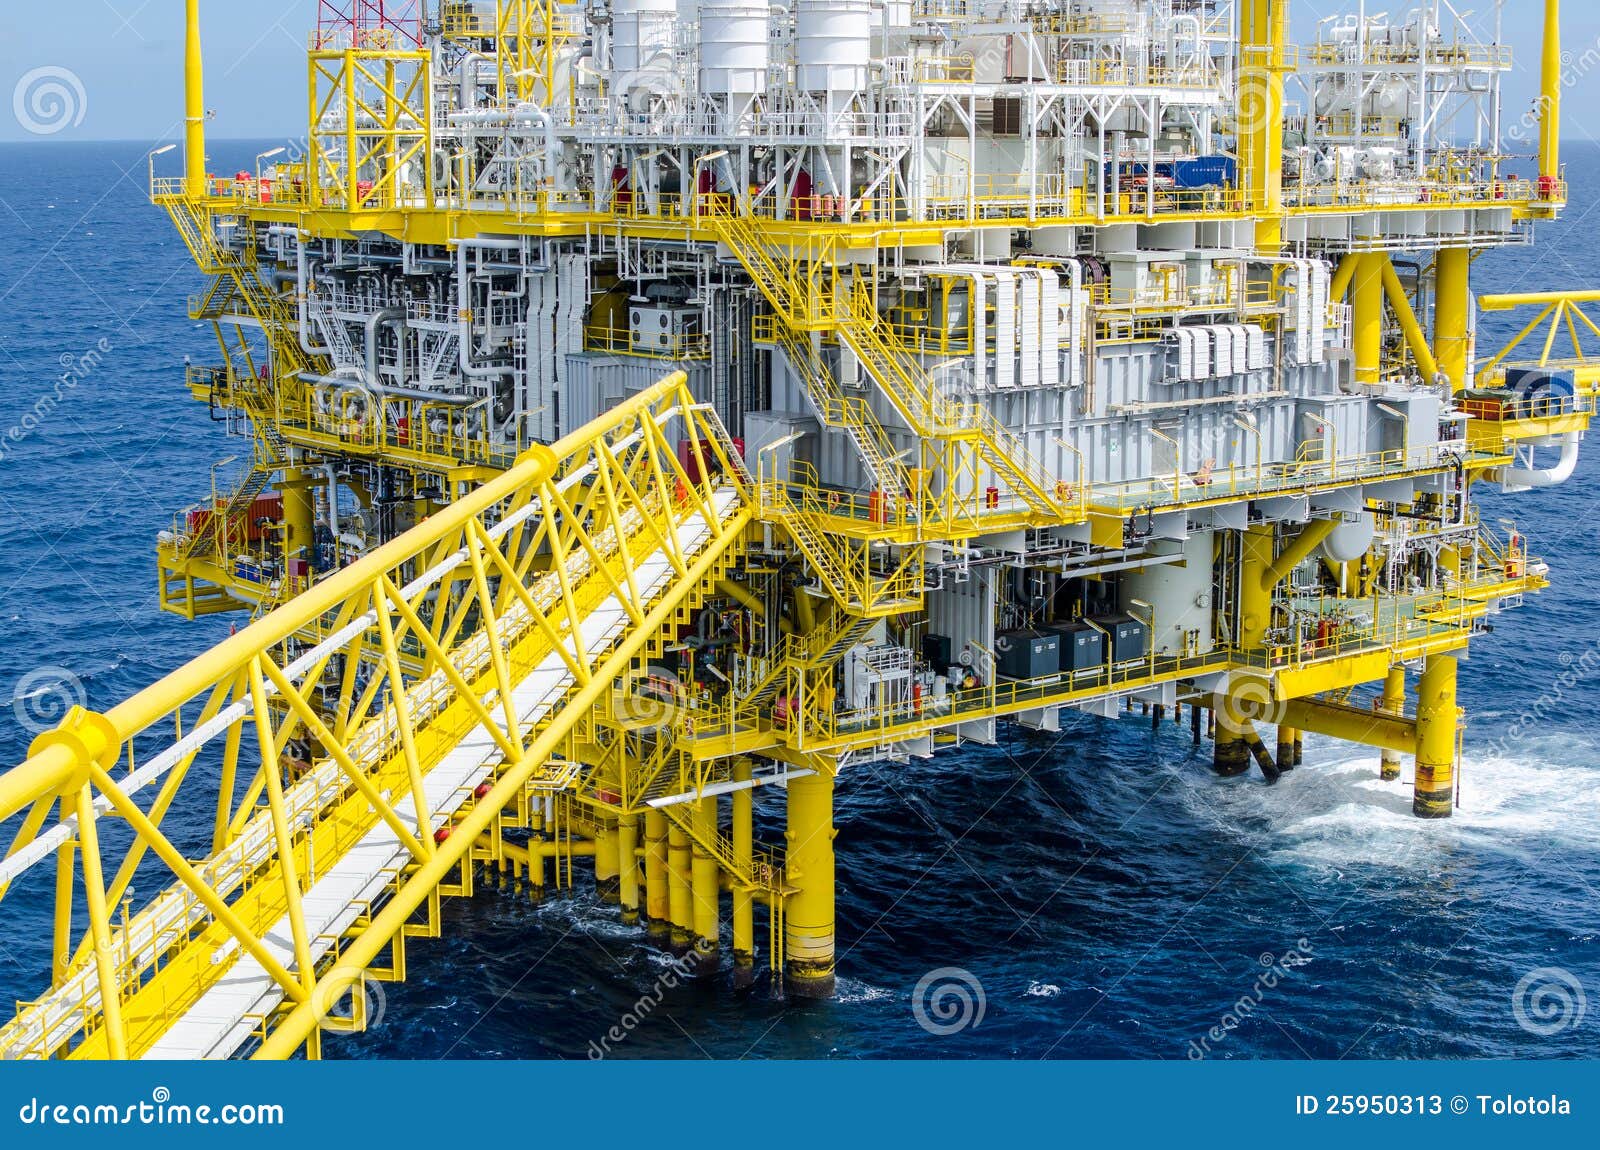 offshore platform stock photos - image: 25950313